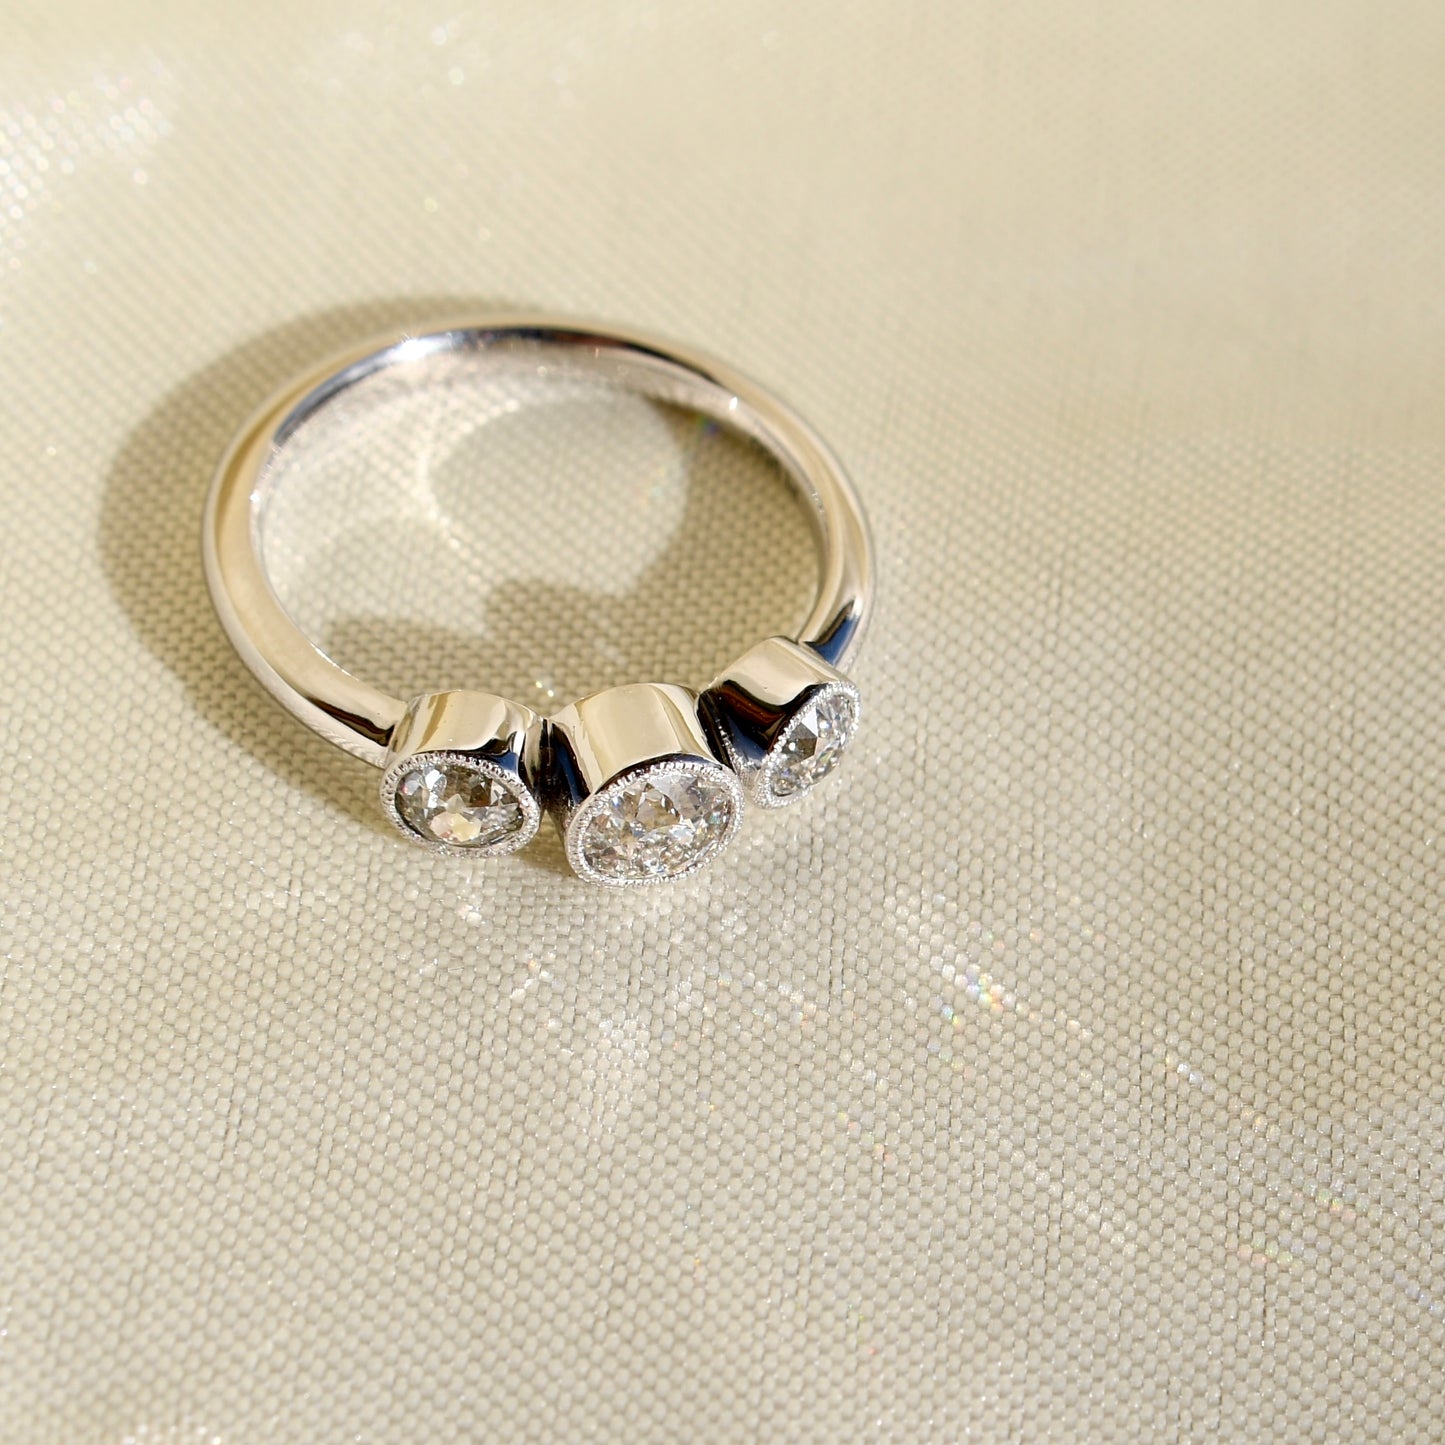 0.86ct old European cut diamond three stone ring